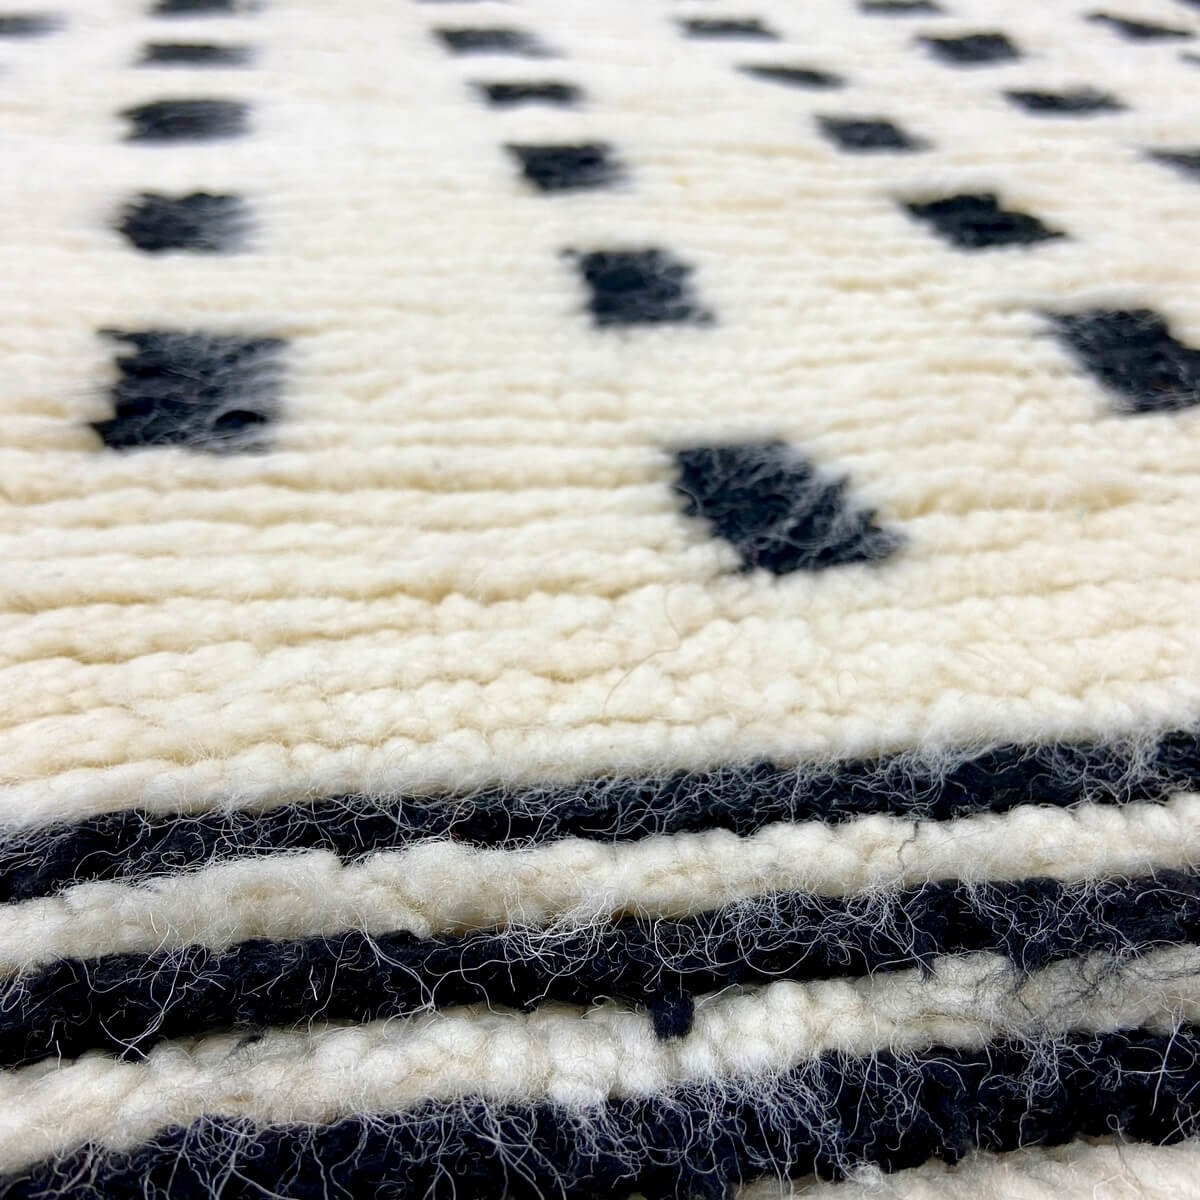 Berber carpet Rug Beni Ouarain Eyla 145x240 cm White and Black (Handmade, Wool, Morocco) Tunisian margoum rug from the city of K